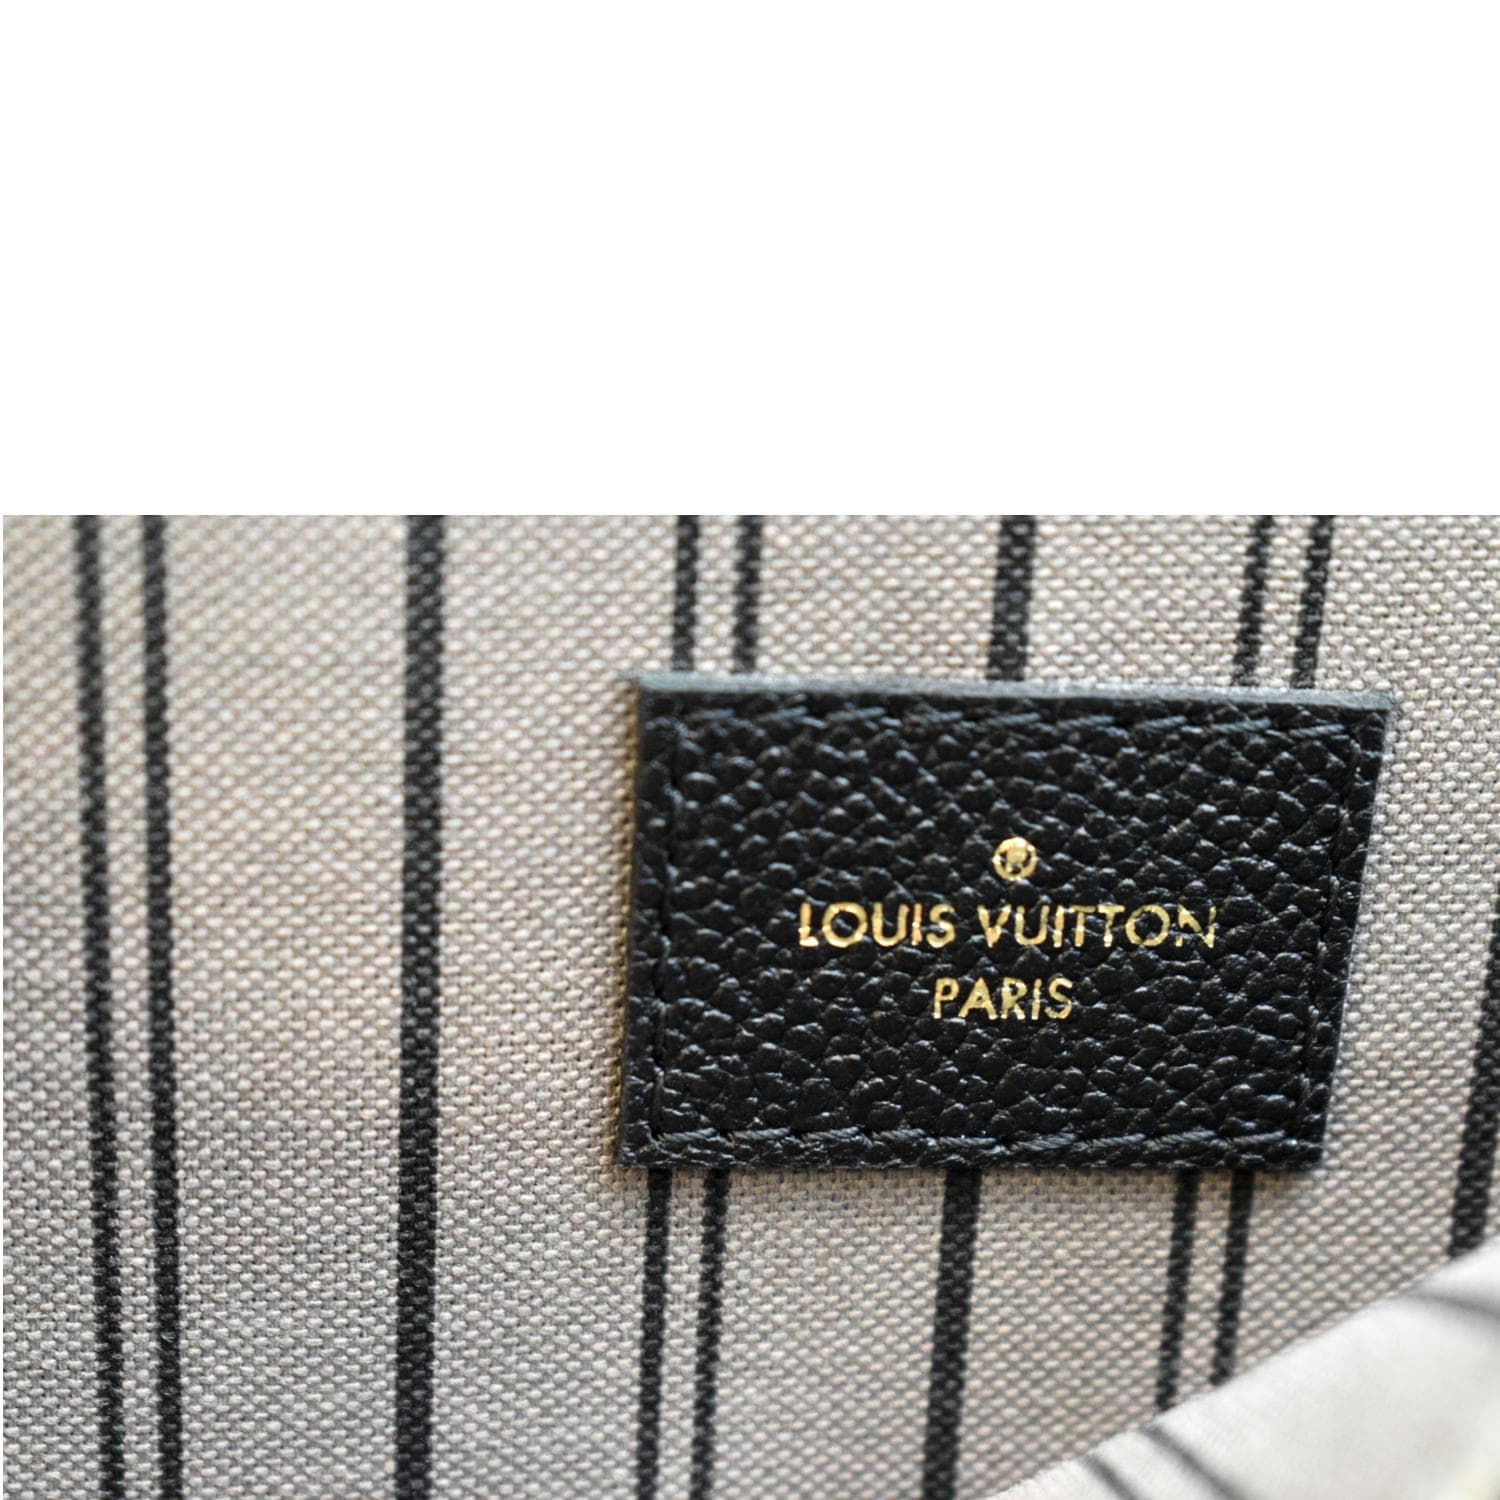 Dusseldorf 01 10 2022 Louis Vuitton Pochette Metis Shoulder Bag Ladies Bag  Fake Plagiarism Customs